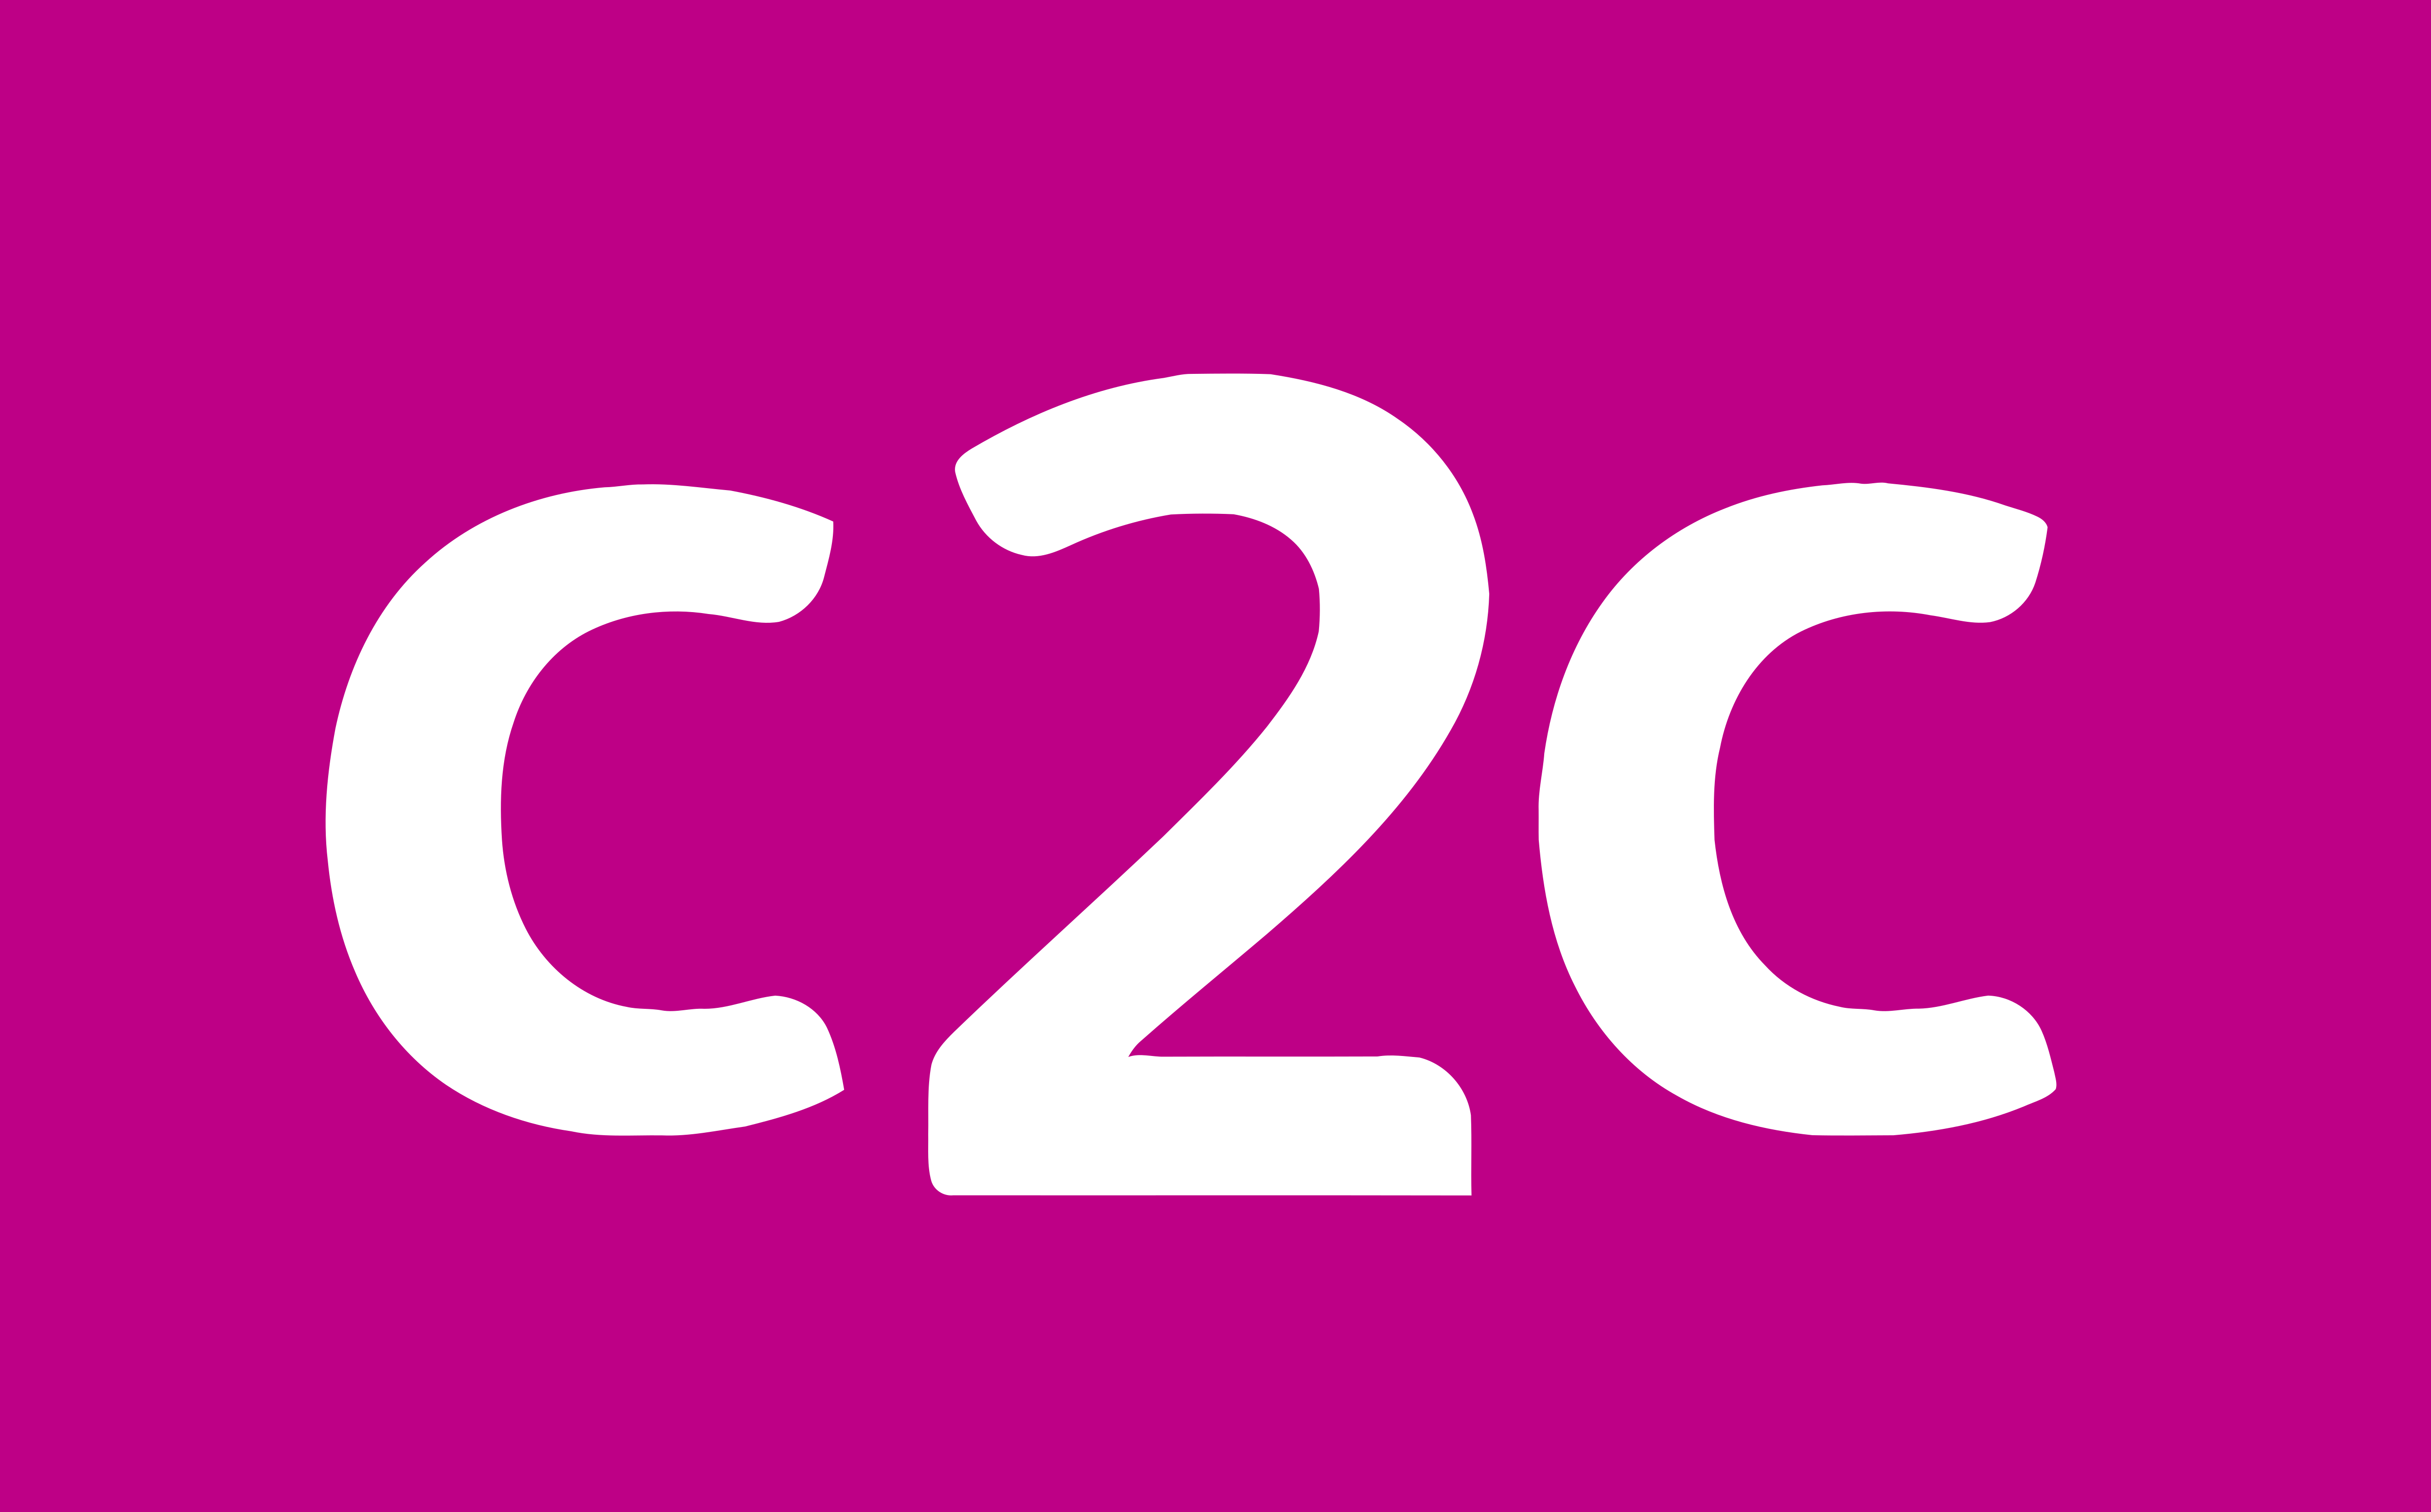 Логотип c. C2c. B2c logo. Логотип с 2 c. C2c что это